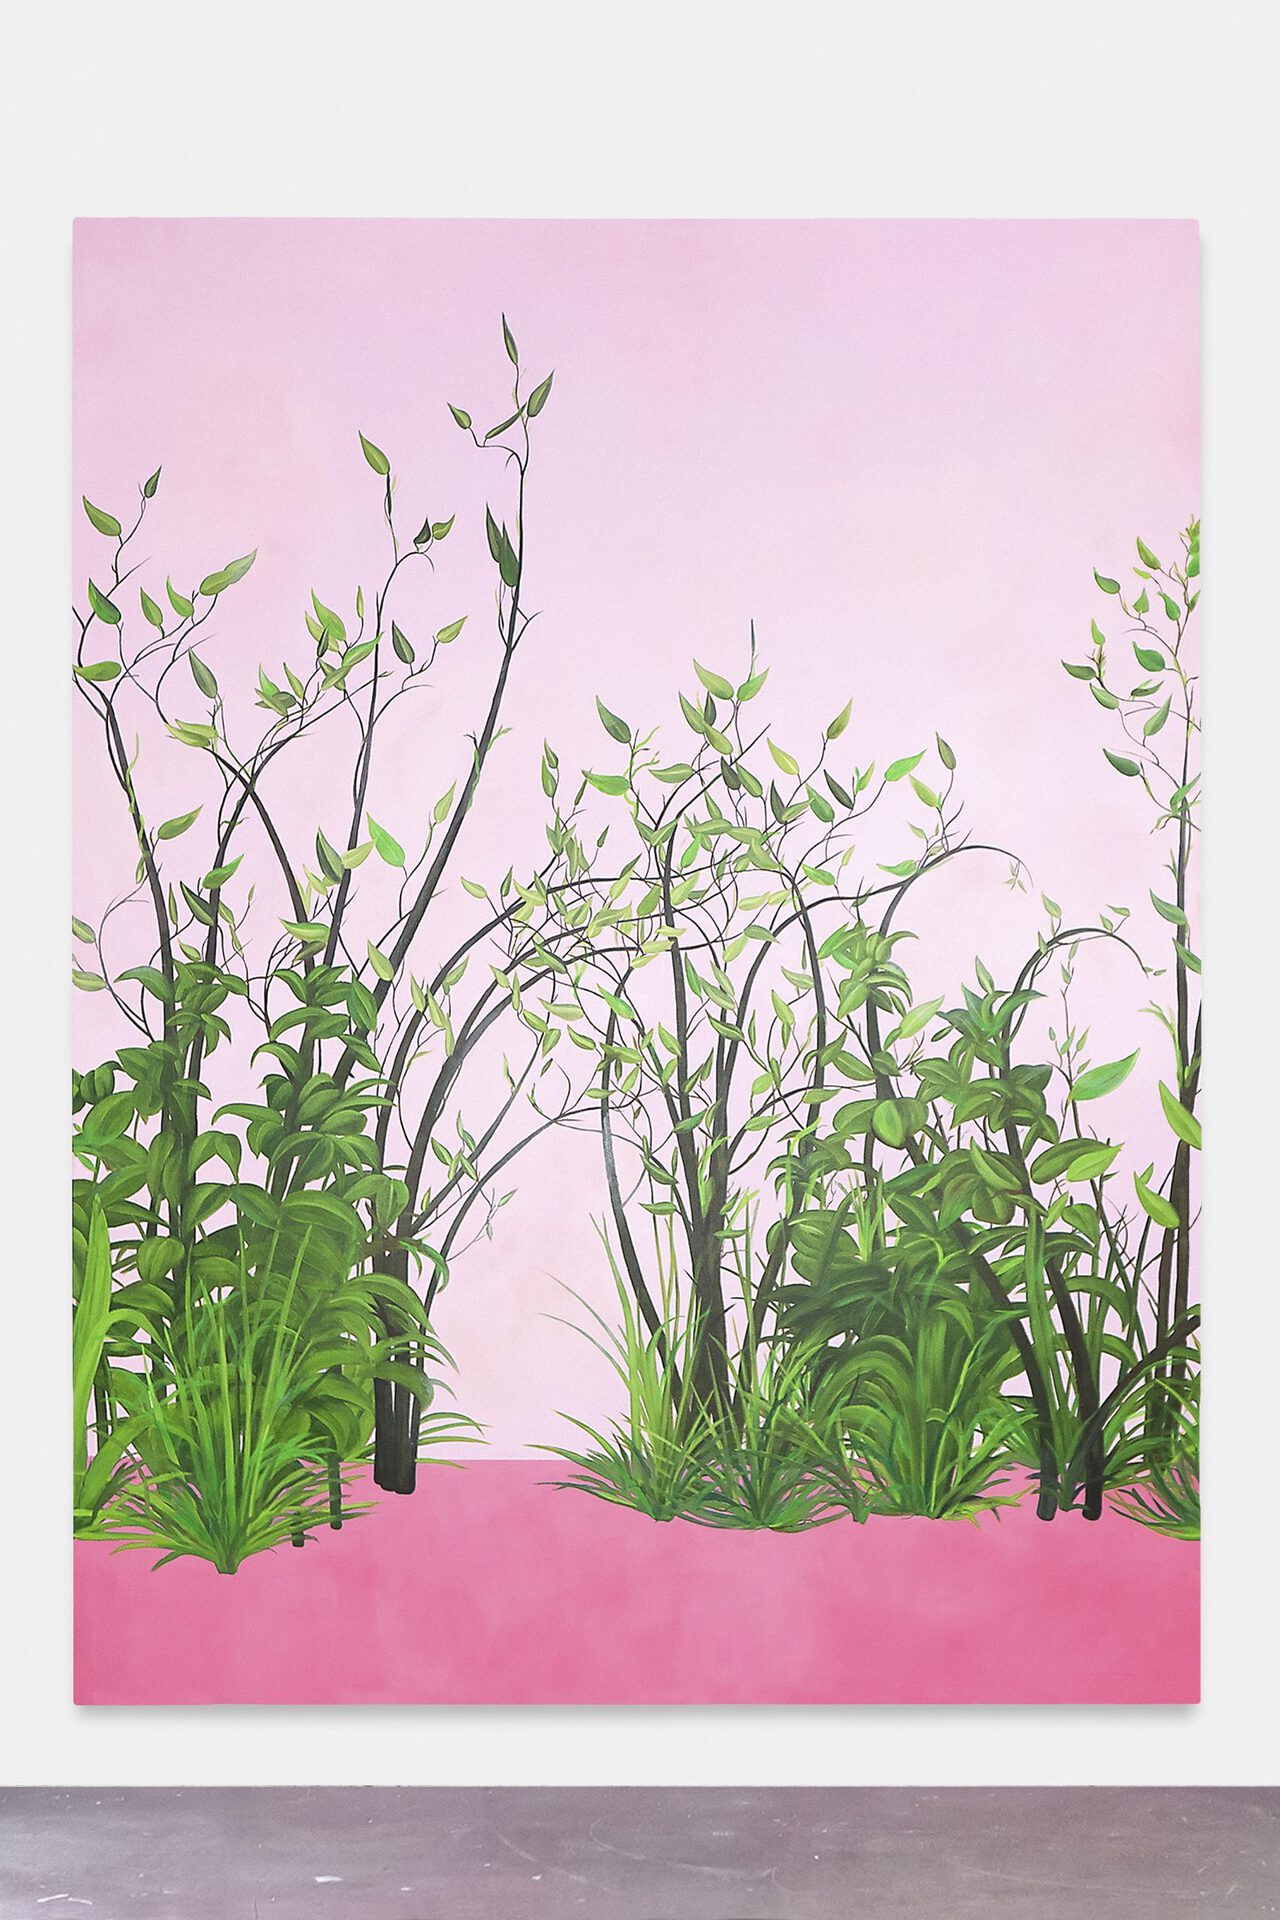 Marius Steiger, A Beginning, 2021, Oil on canvas, 240 × 180 cm